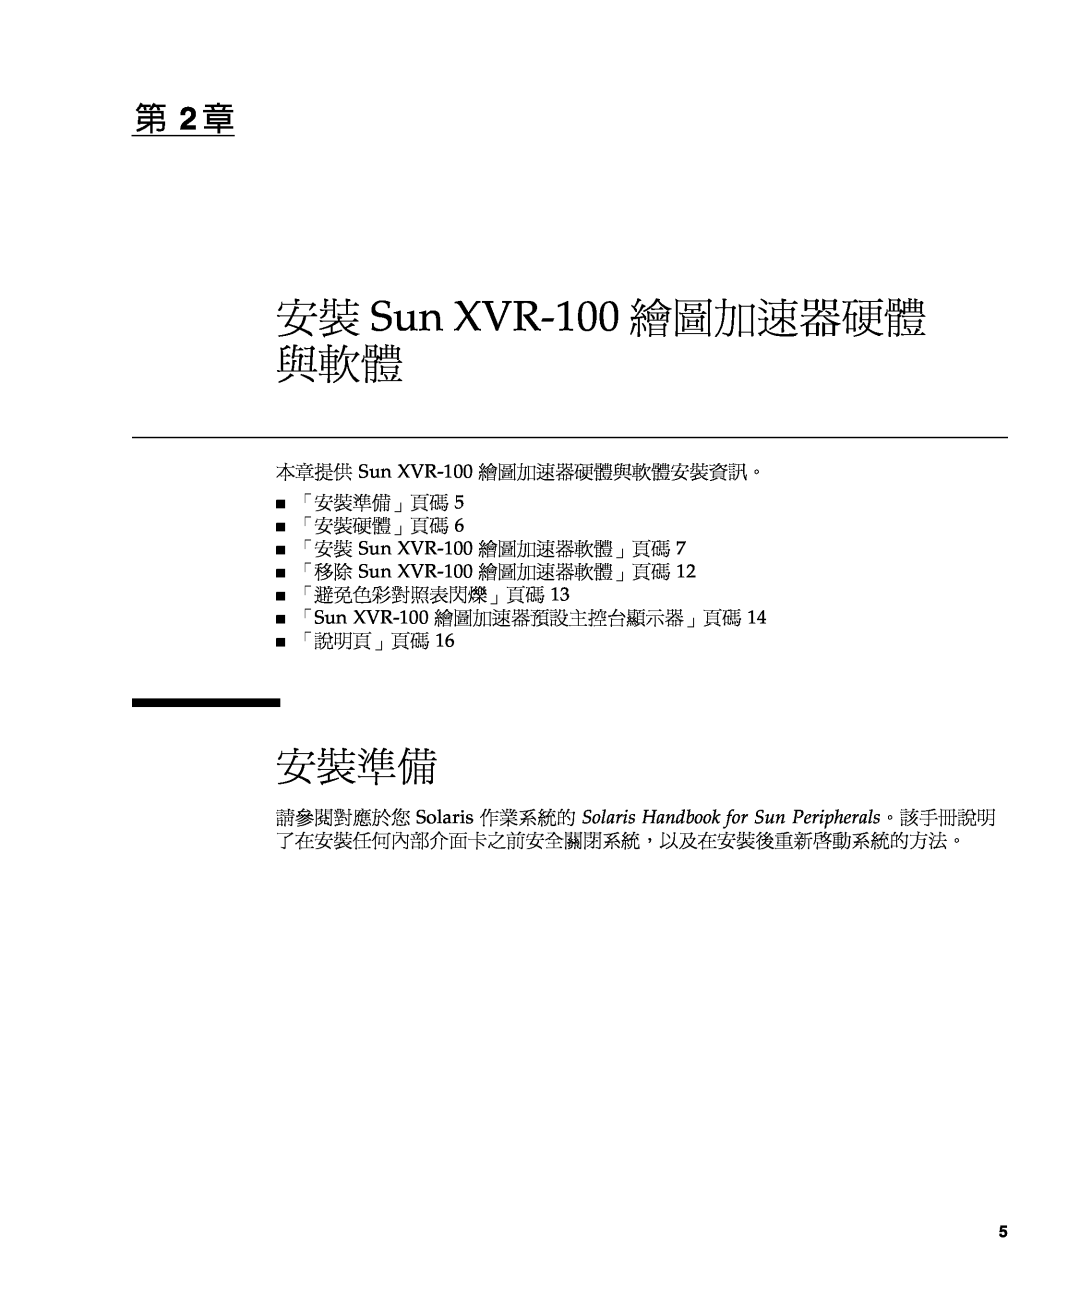 Sun Microsystems manual 安裝 Sun XVR-100 繪圖加速器硬體 與軟體, 第 2 章, 本章提供 Sun XVR-100 繪圖加速器硬體與軟體安裝資訊。 「安裝準備」頁碼 「安裝硬體」頁碼 